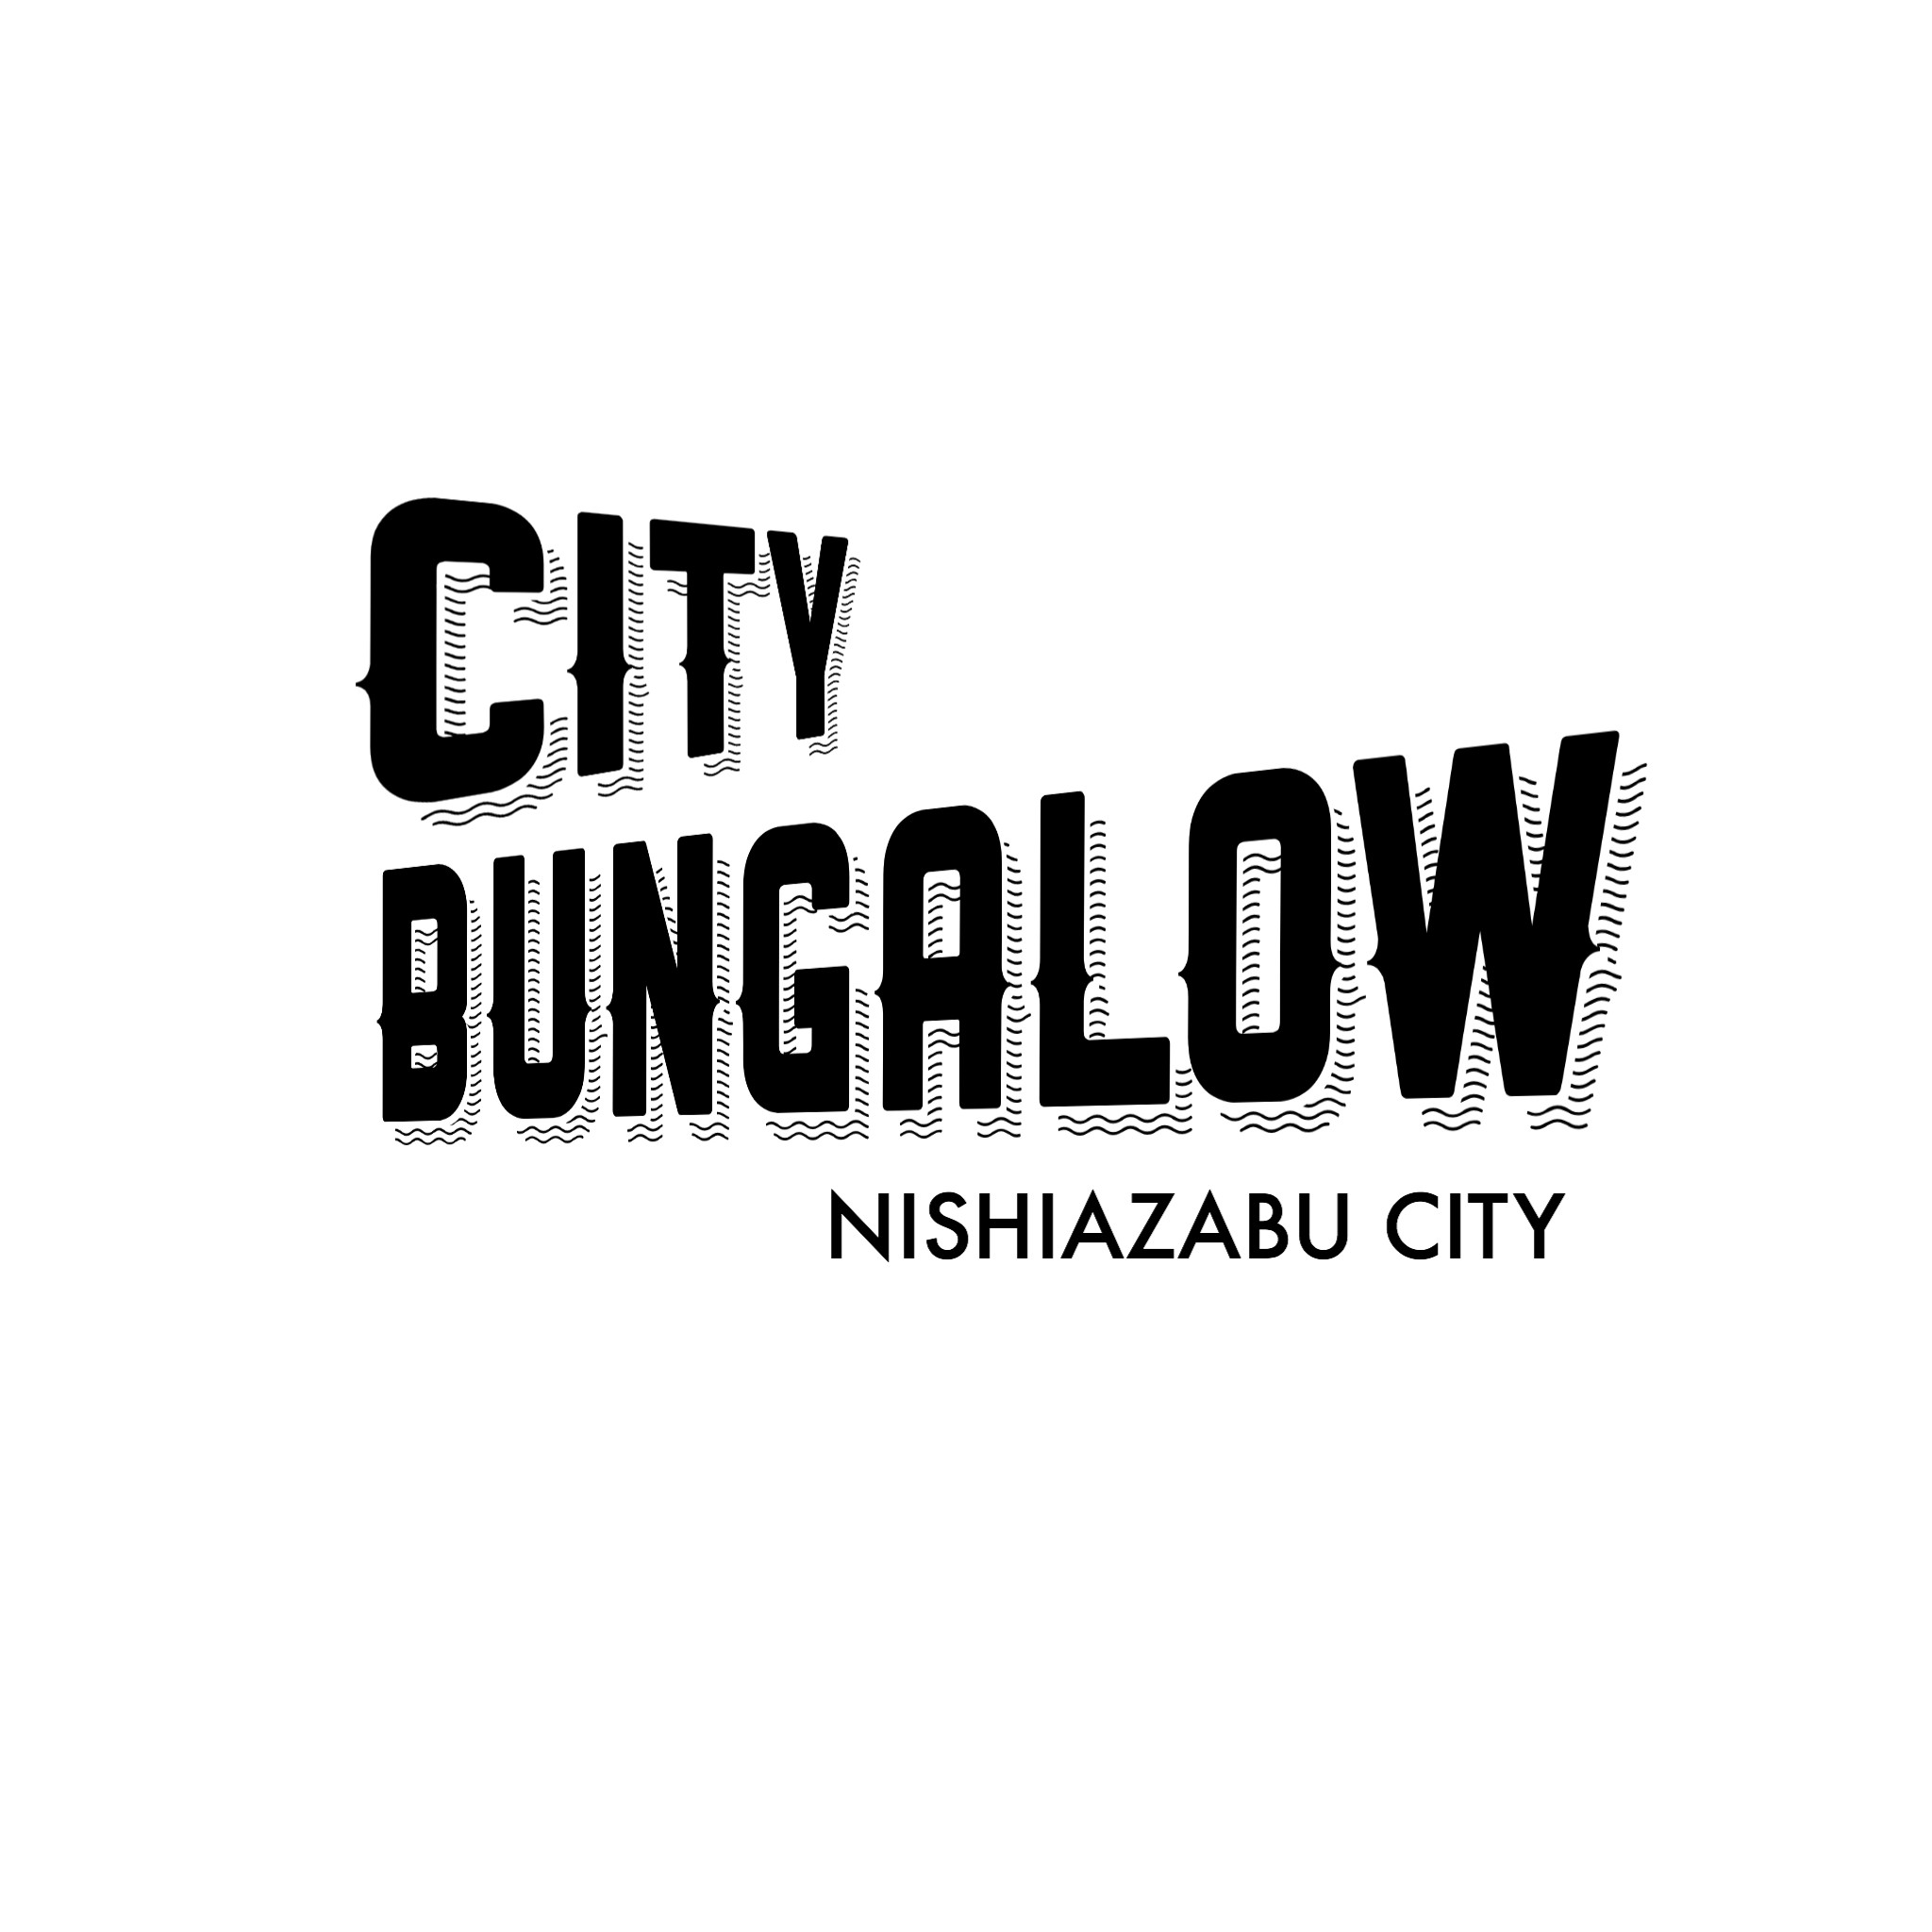 CITY BUNGALOW